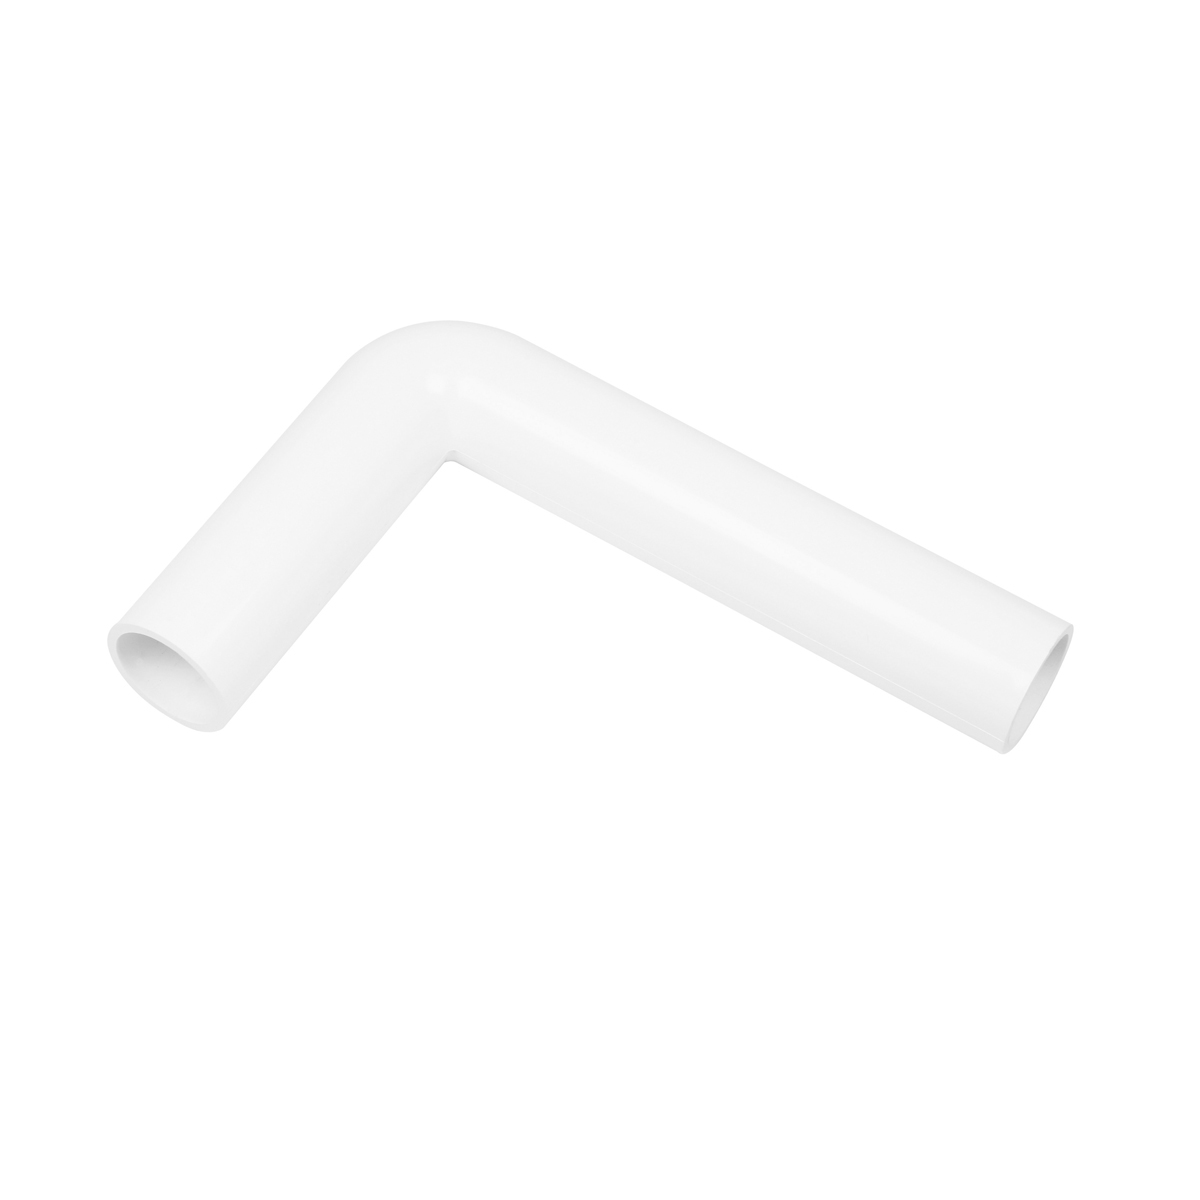 Pipe elbow D50 PVC white 245 x 158 mm Pipe elbow D50 PVC white 245 x 158 mm